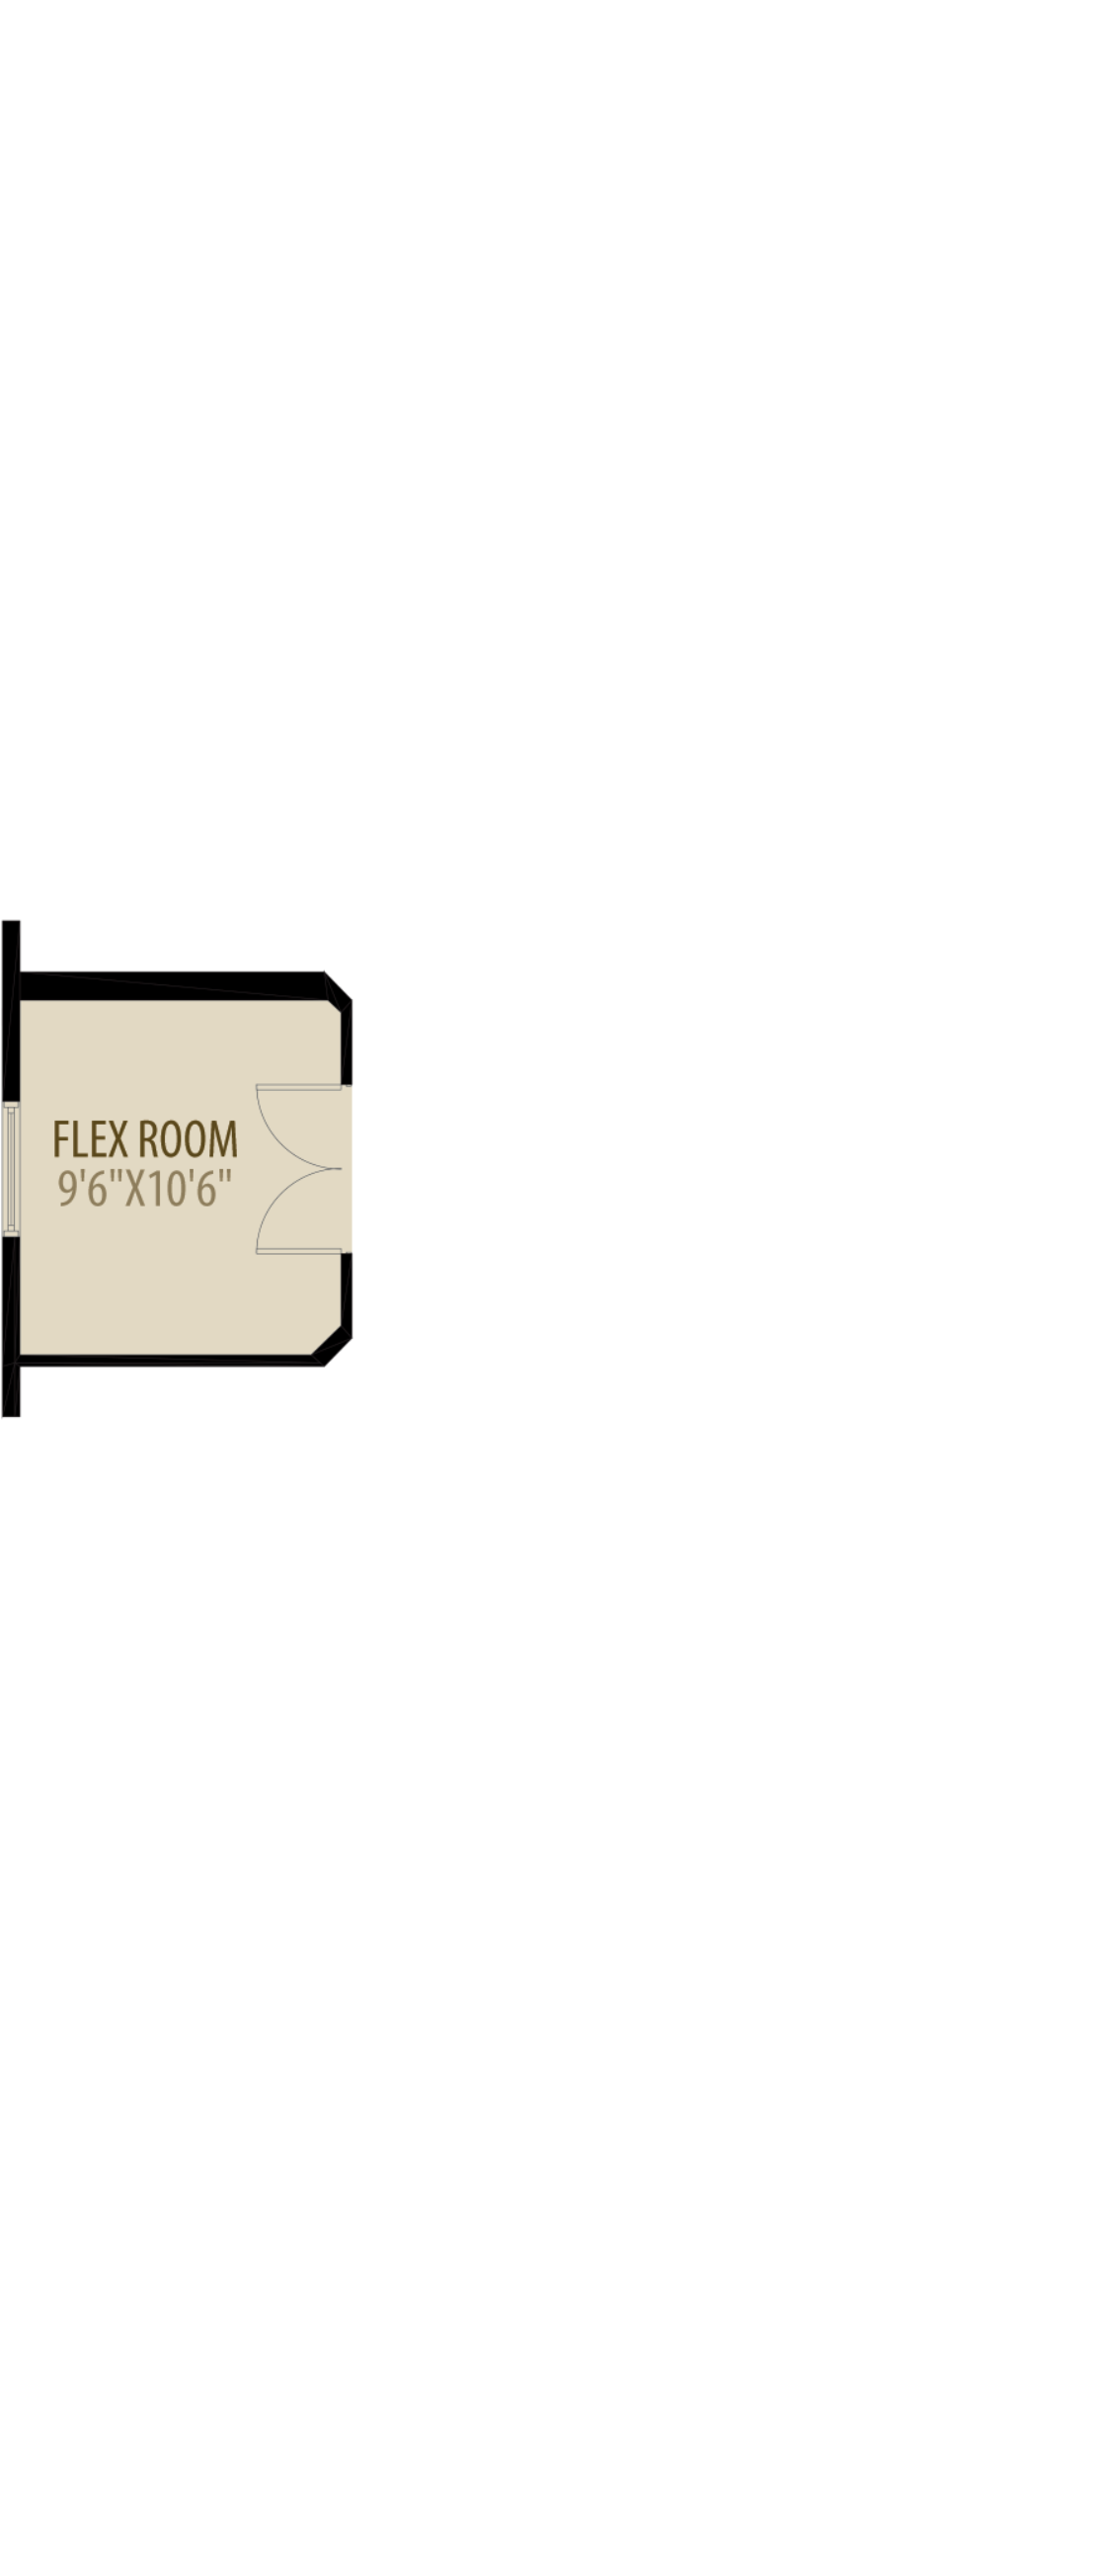 Enclsoed Flex Room